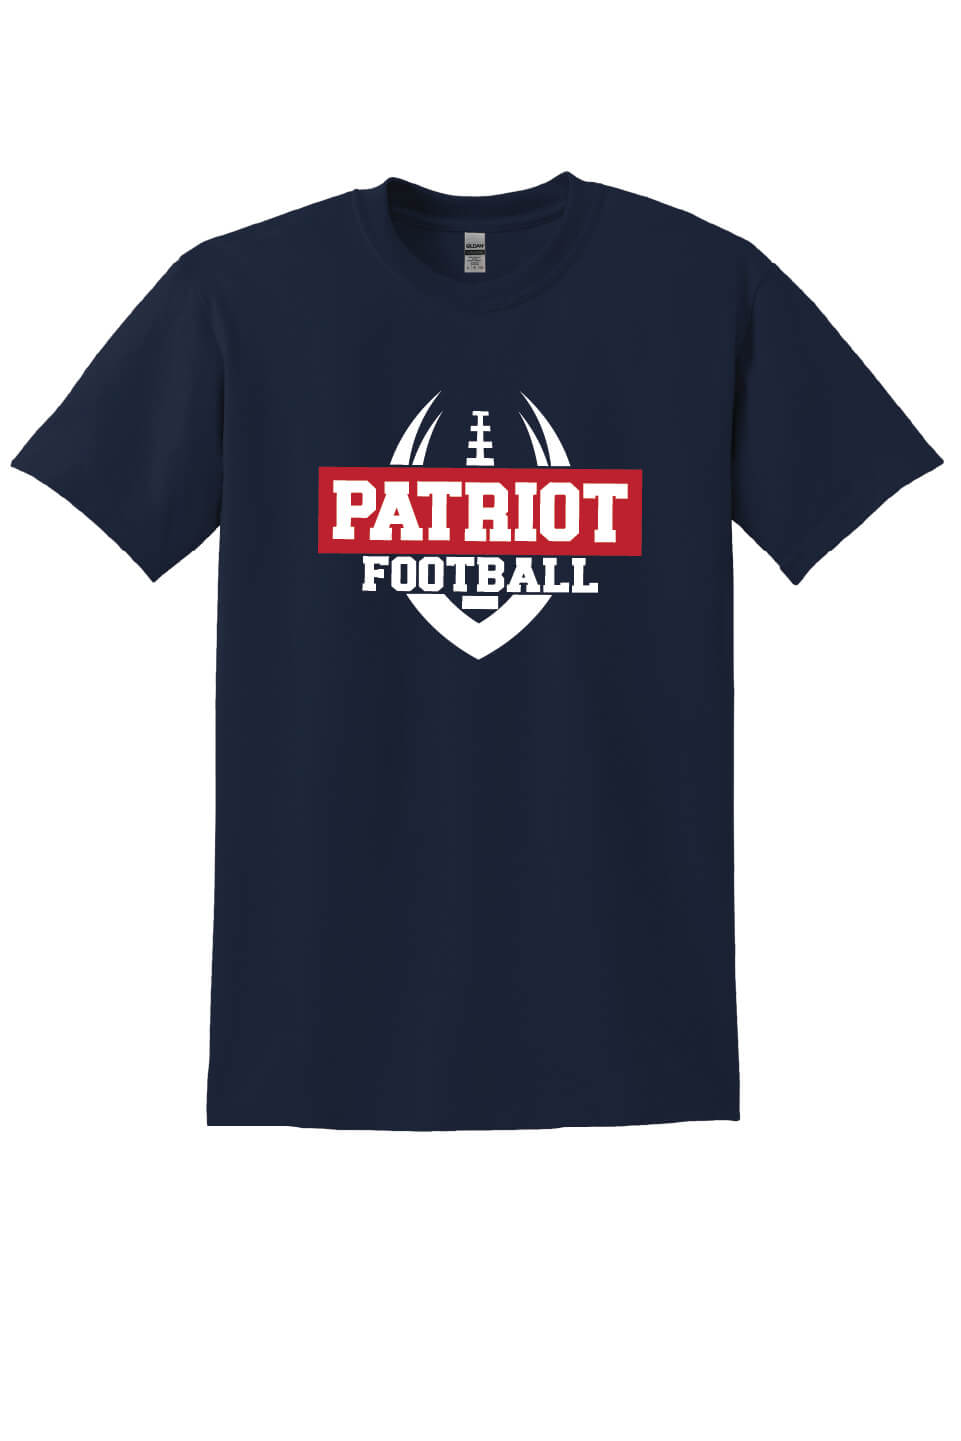 Patriot Football Short Sleeve T-shirts (Youth) navy